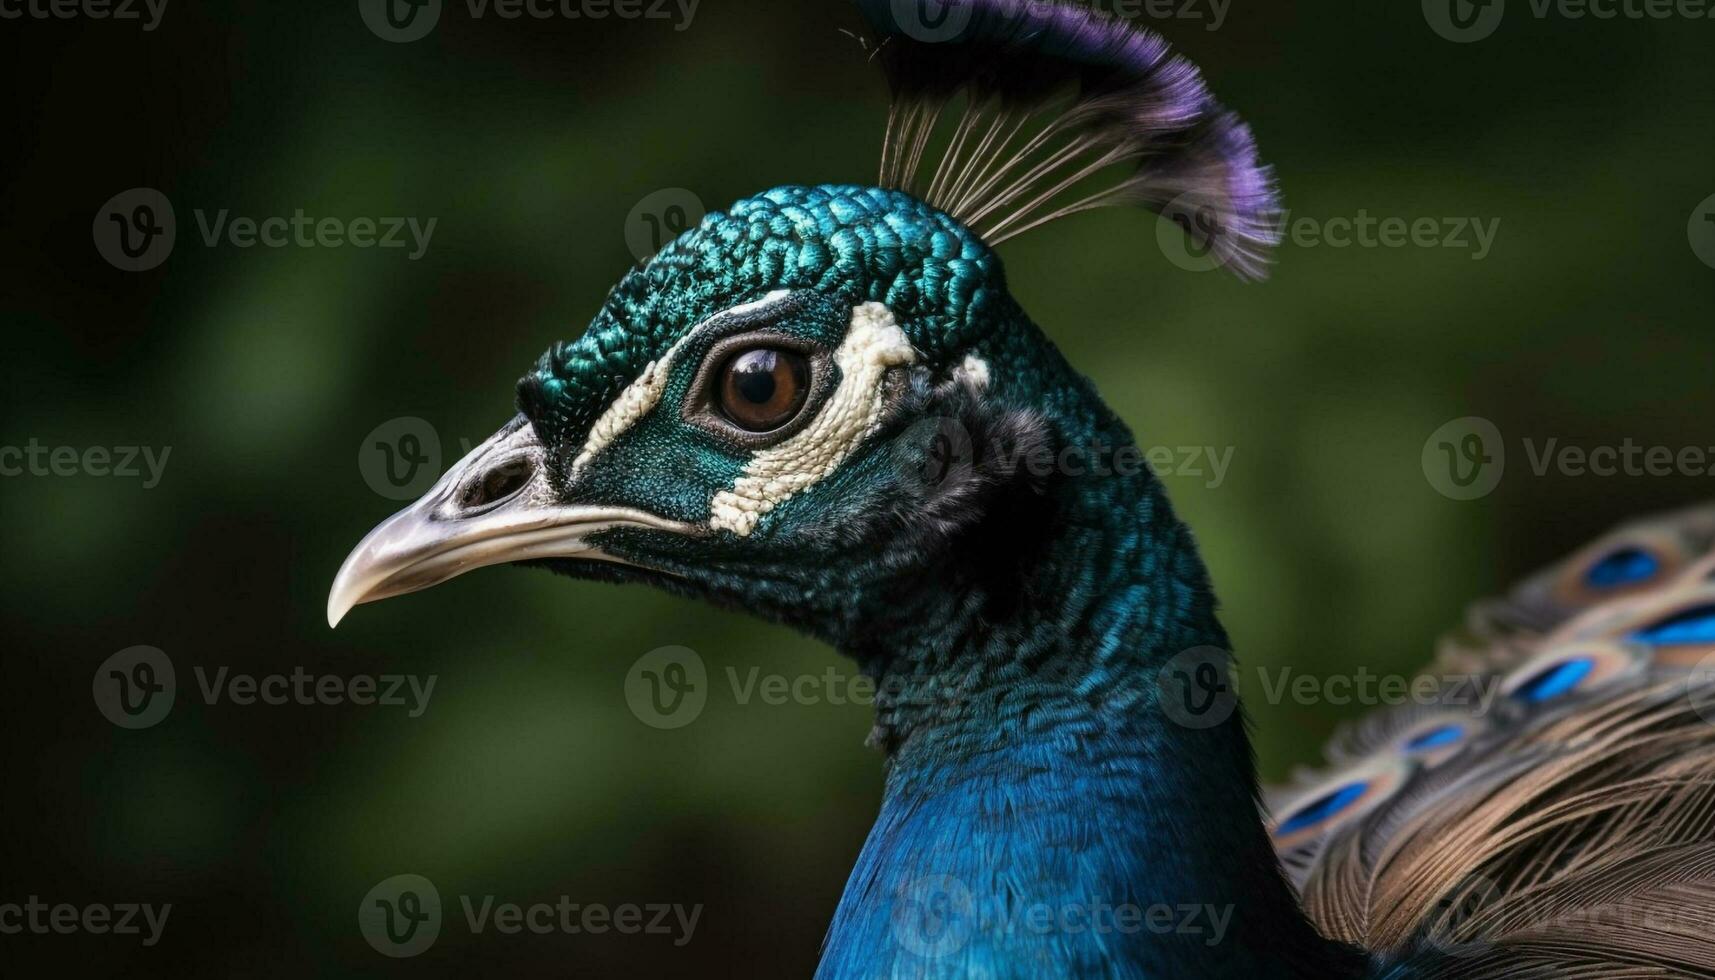 majestoso pavão monitores vibrante cores, exibindo beleza dentro natureza gerado de ai foto